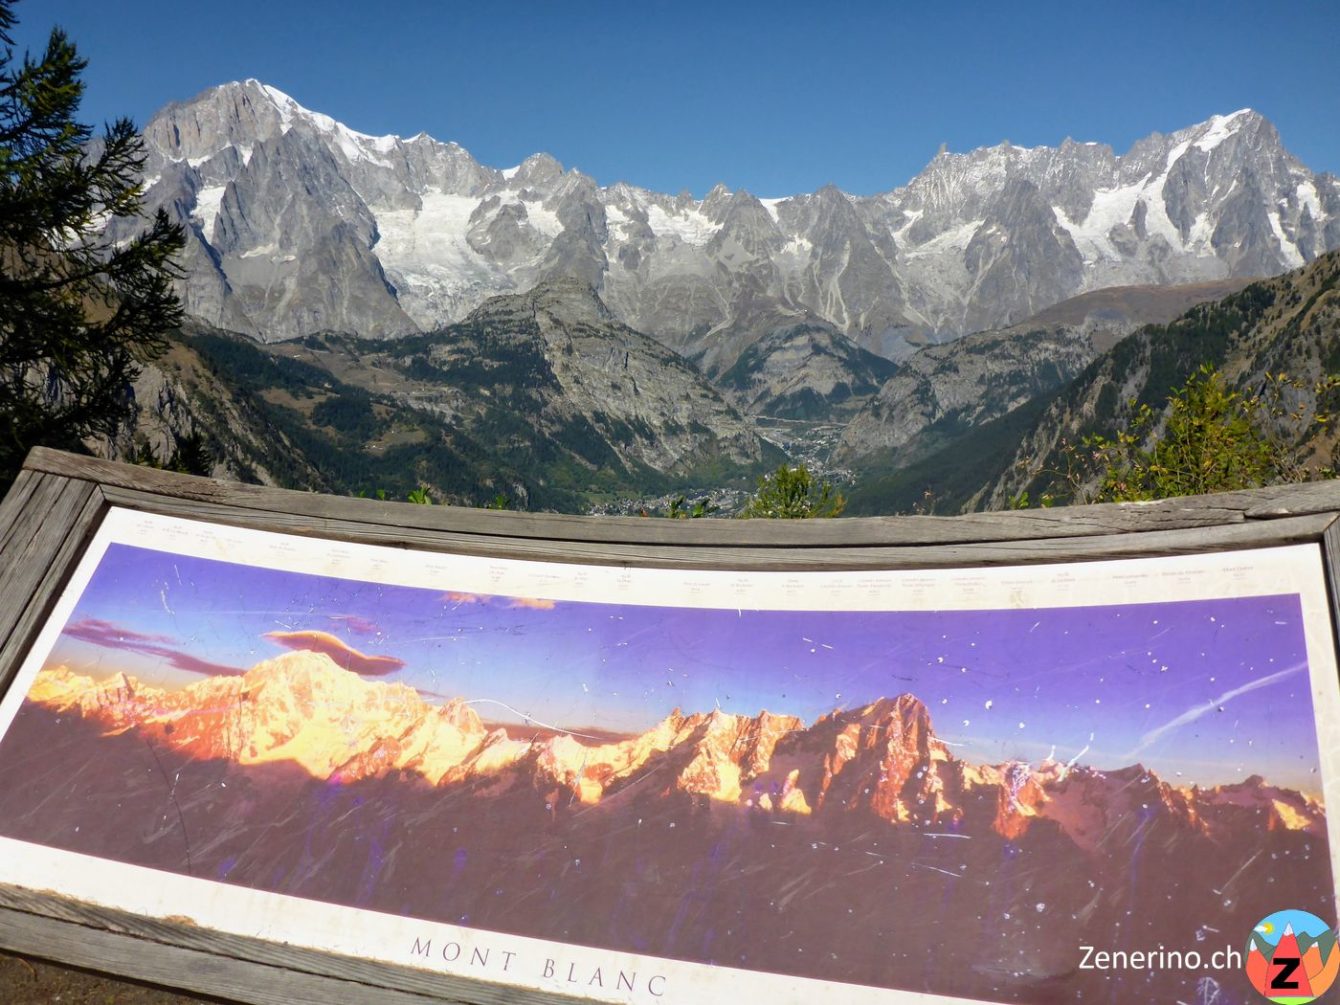 Mont Blanc / Monte Bianco